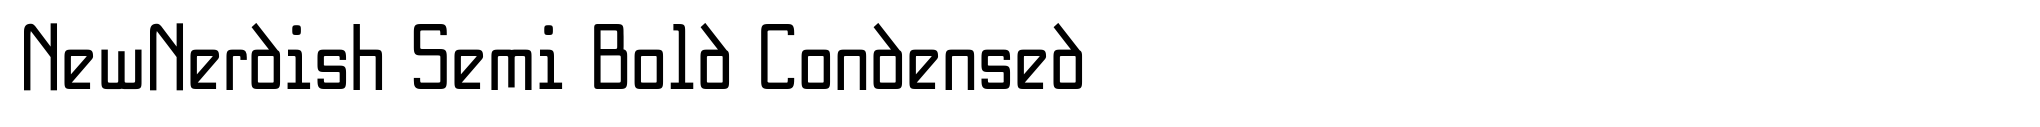 NewNerdish Semi Bold Condensed image